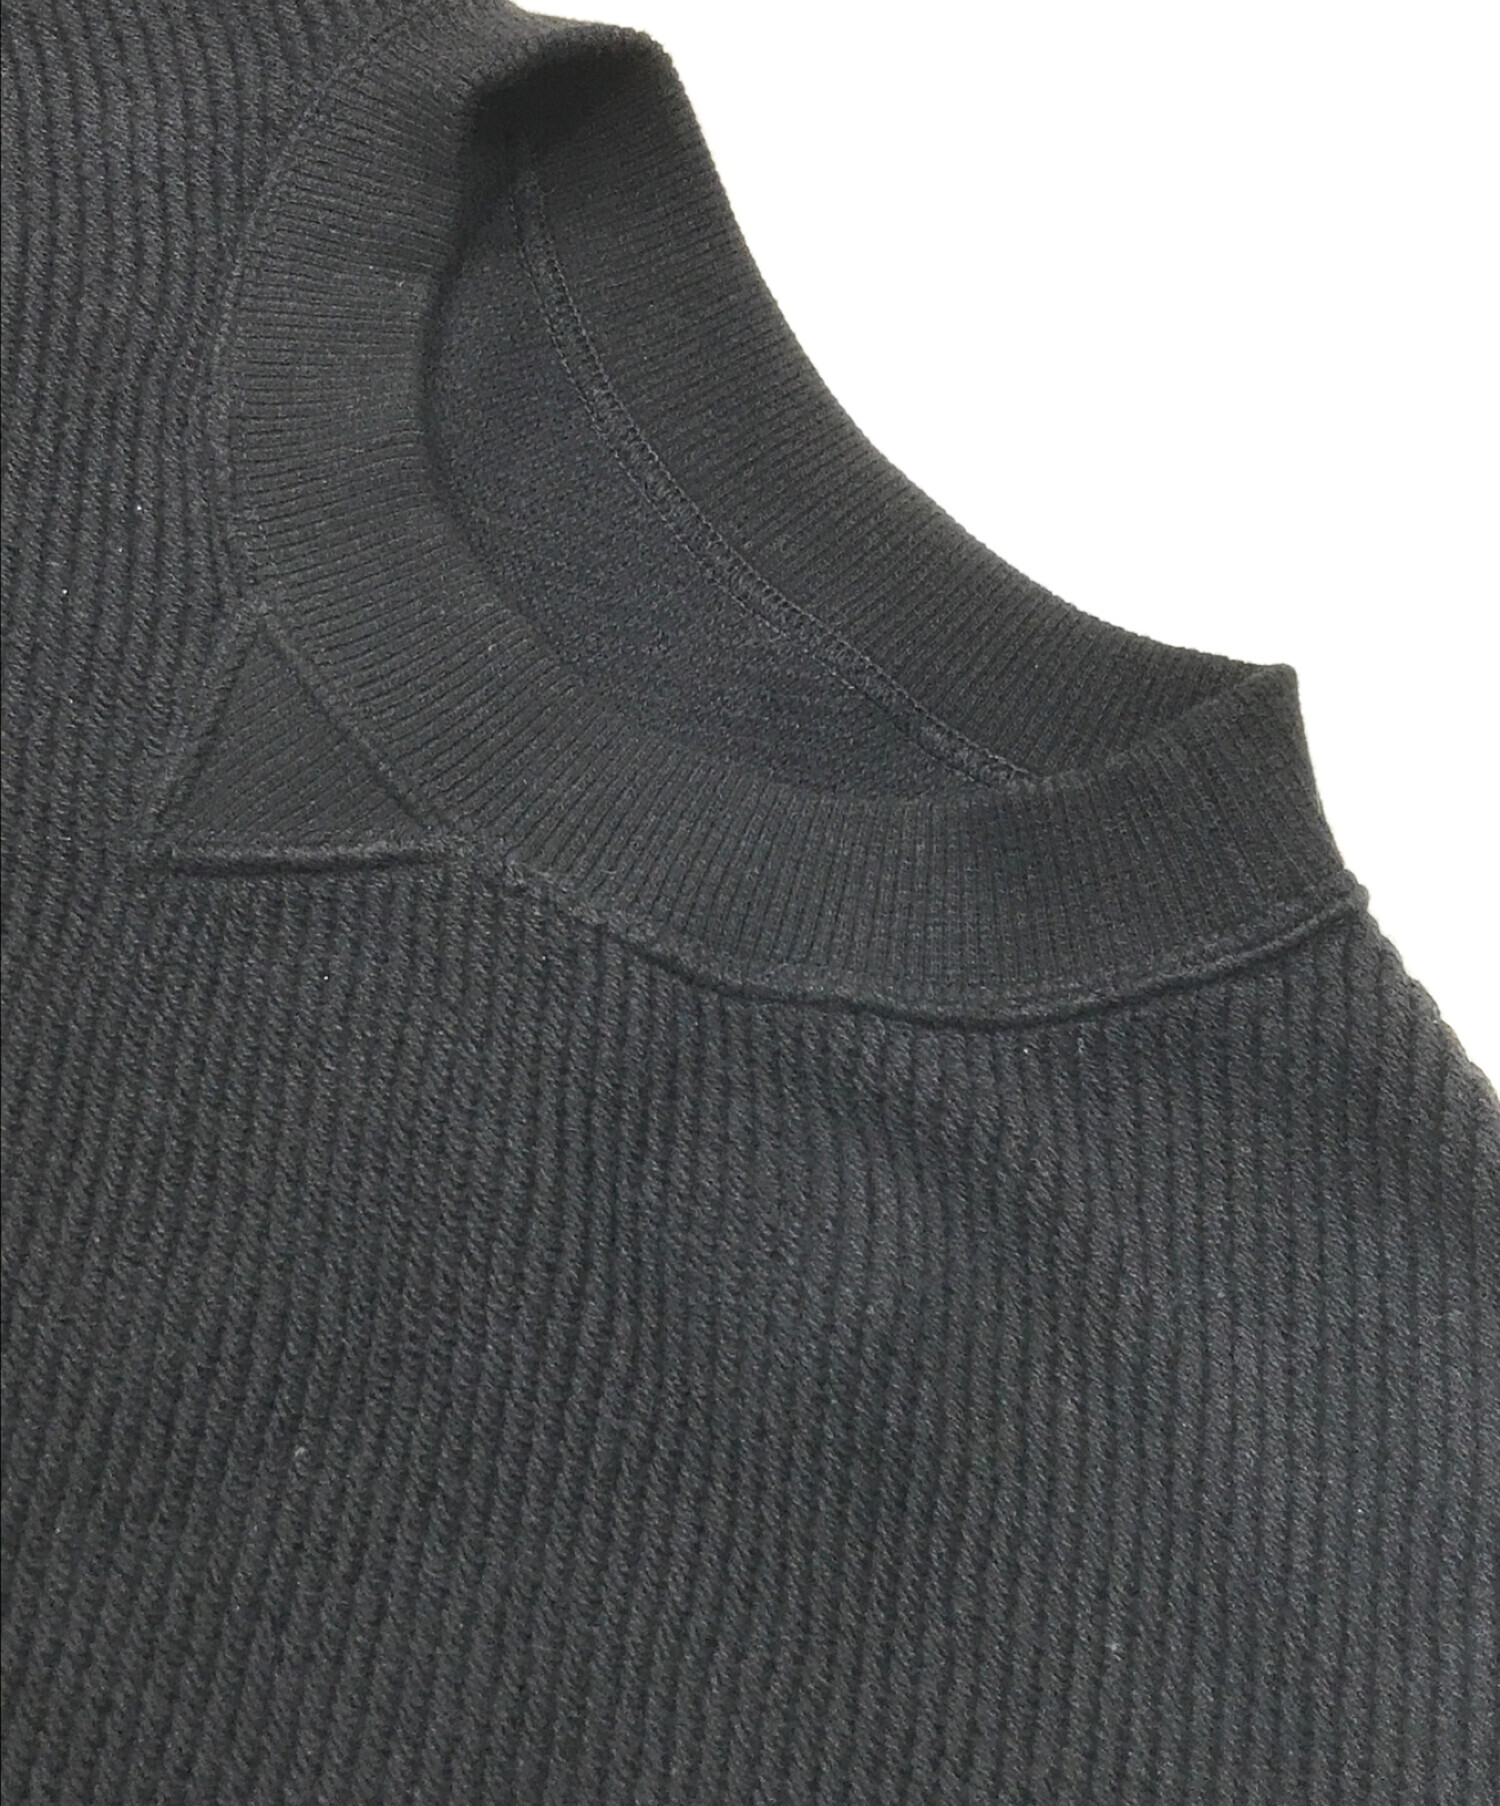 sacai (サカイ) 裾ドローコードプルオーバーニット ブラック サイズ:3